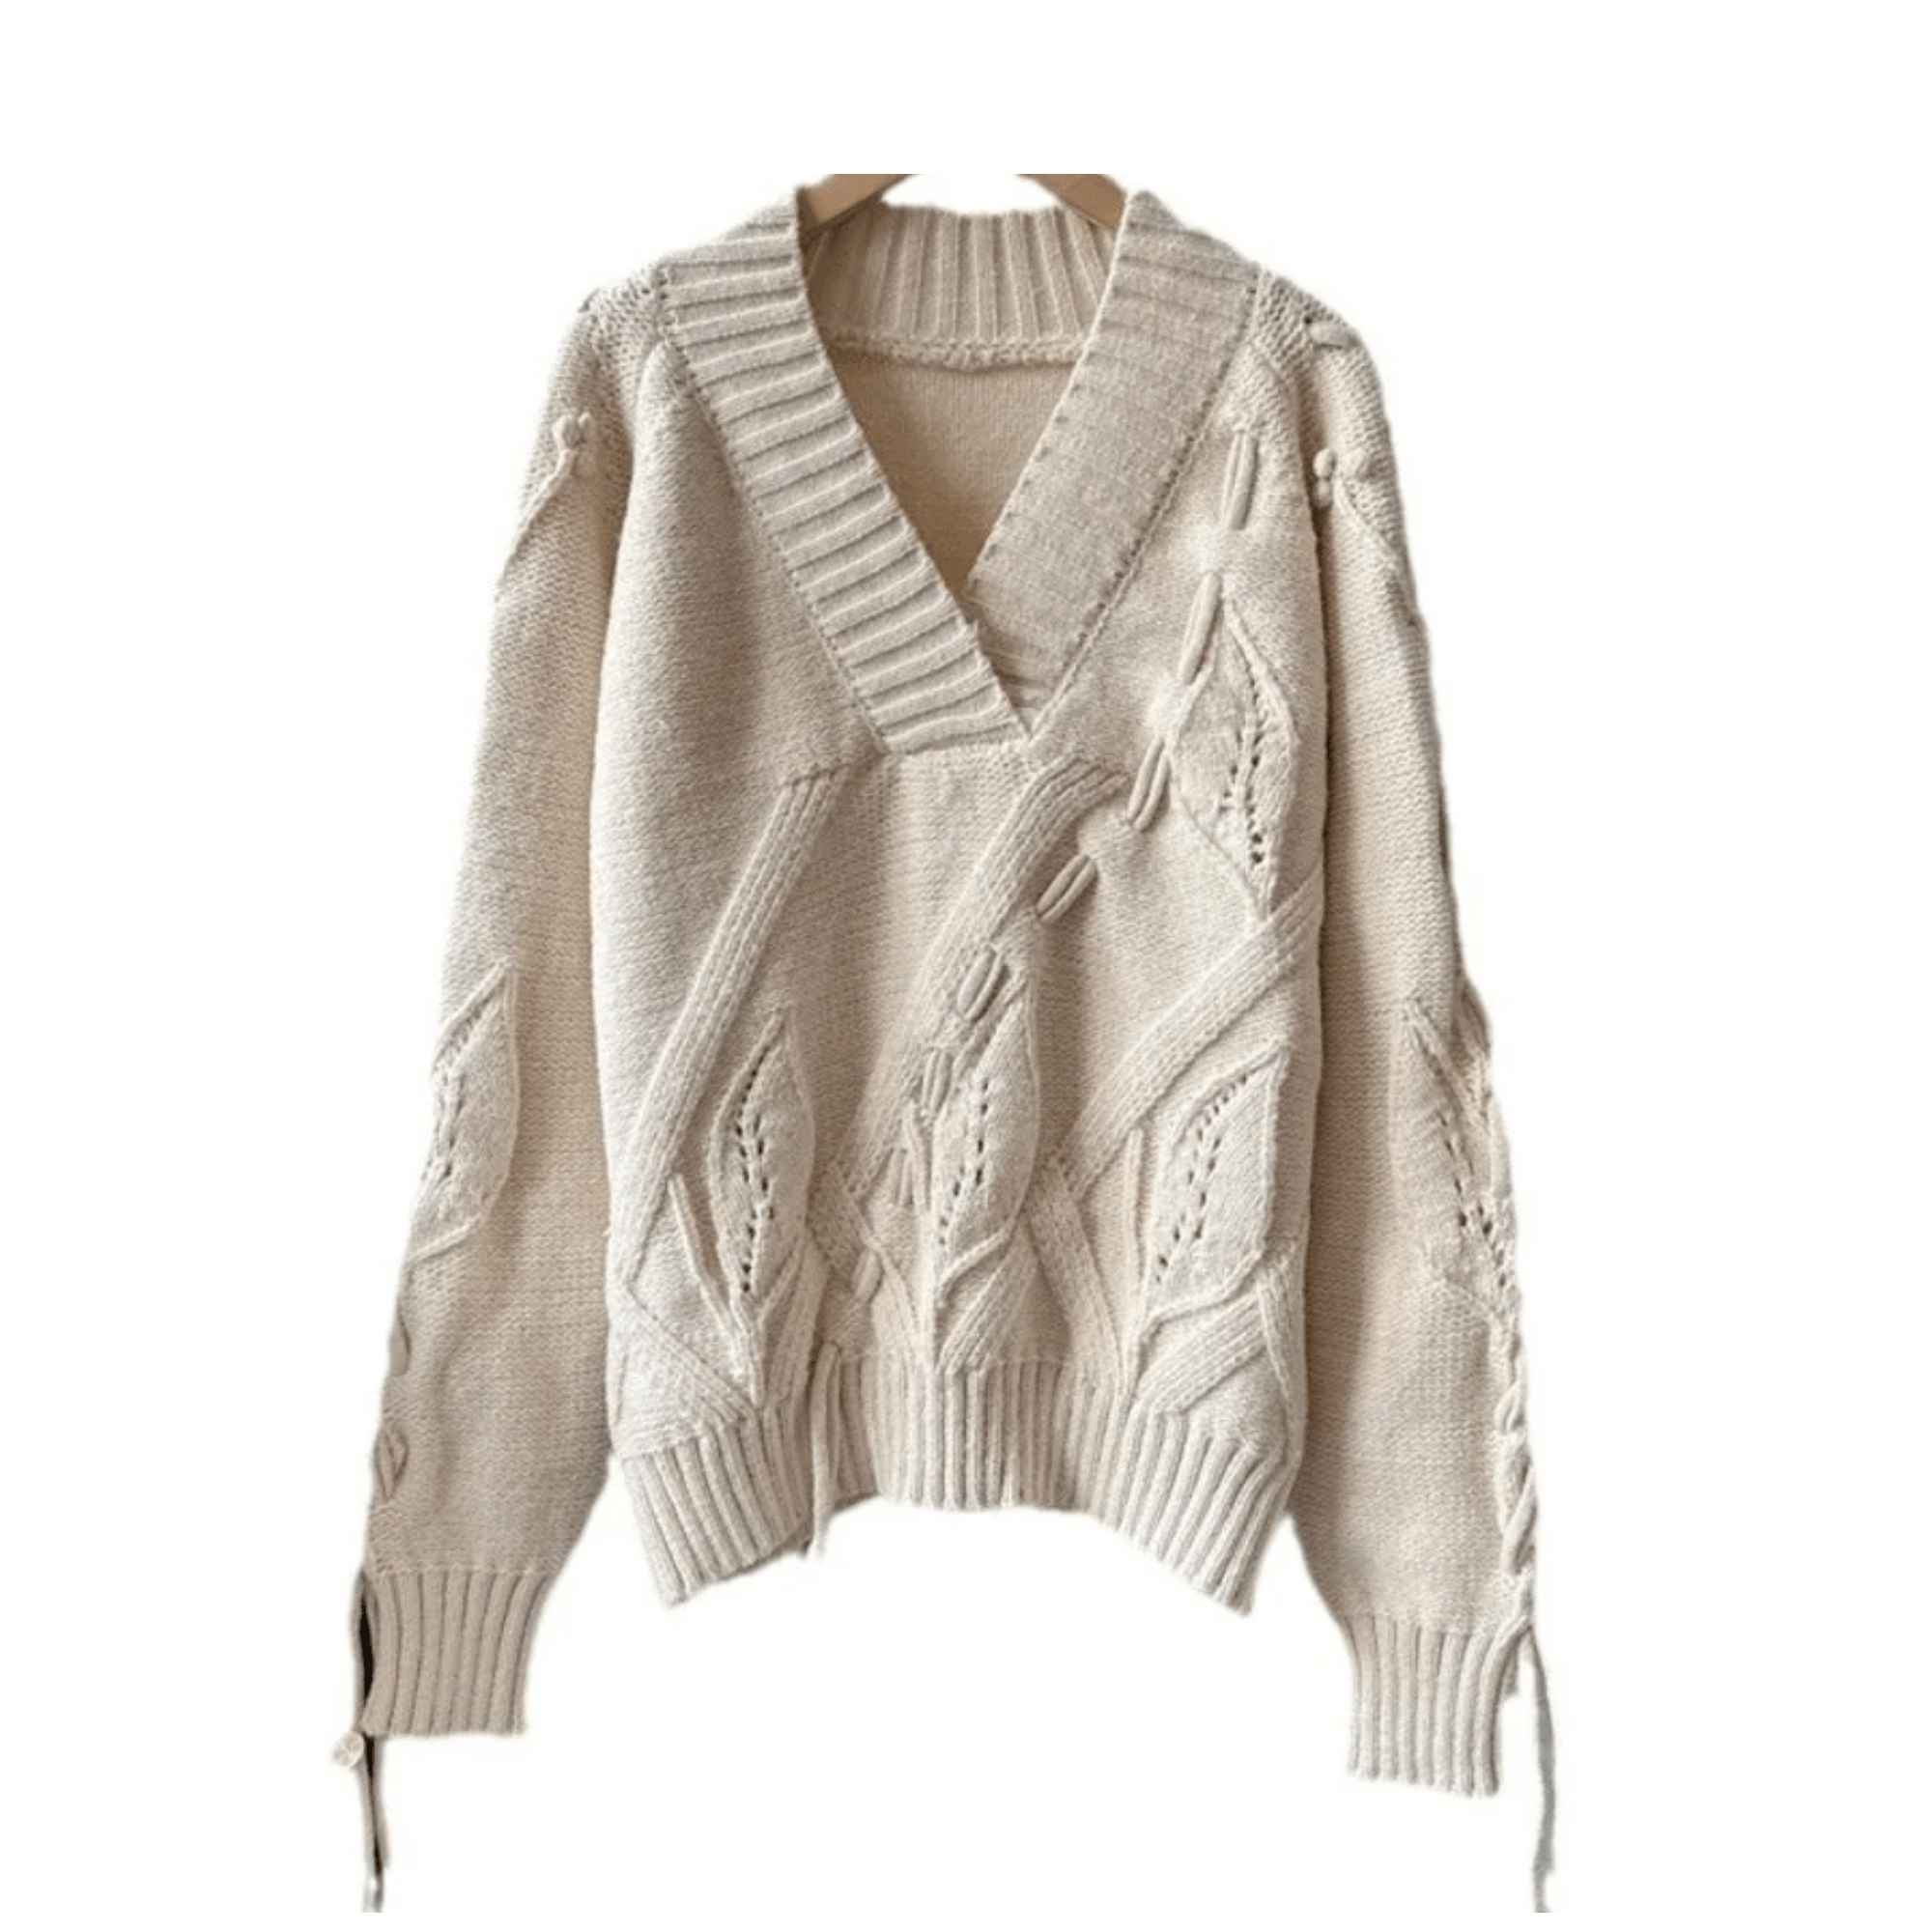 Embossed Leaves Knitted Sweater - Kelly Obi New York